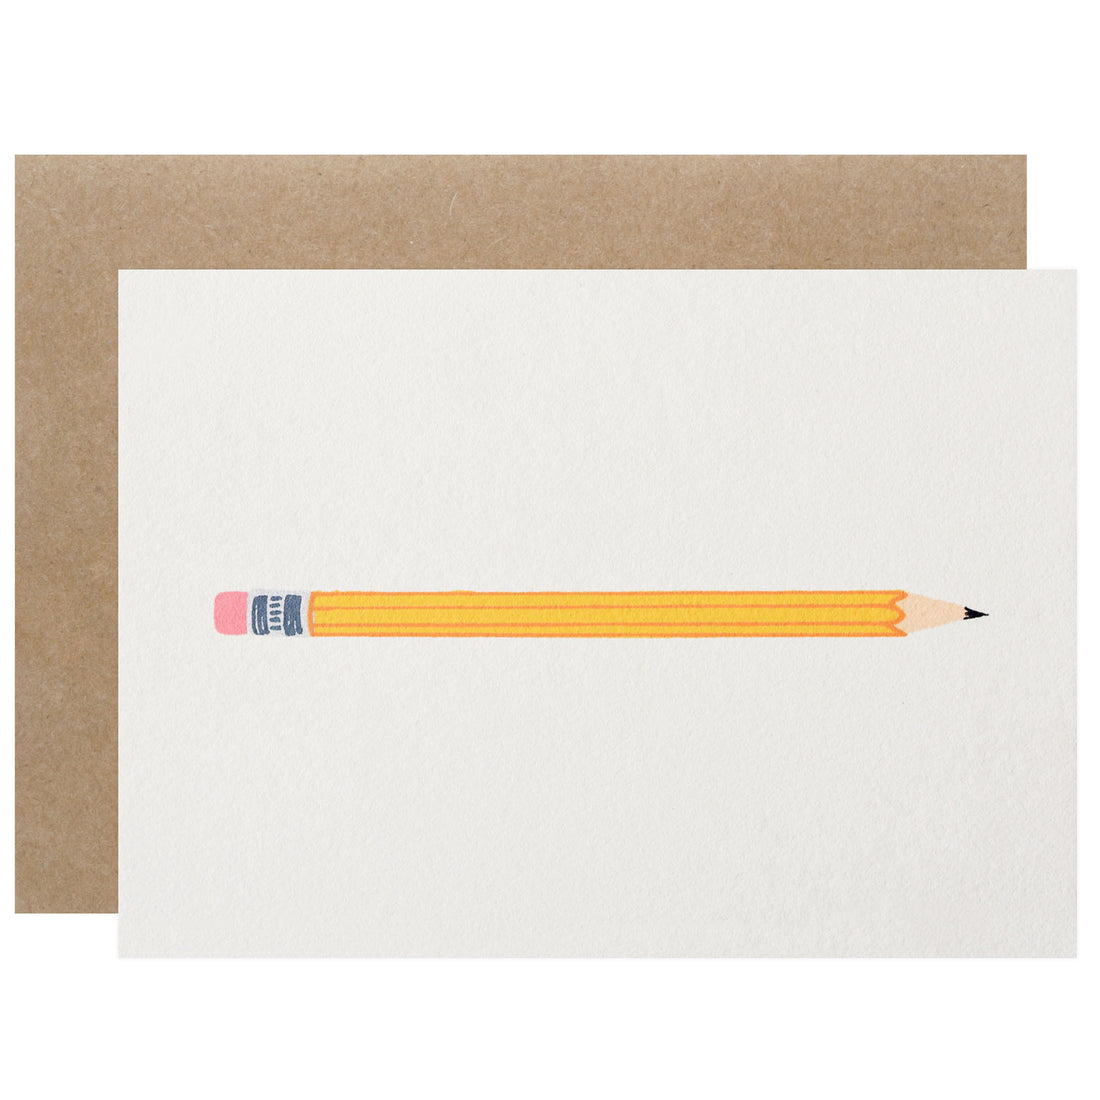 Gold Teeth Brooklyn Pencil Greeting Card 